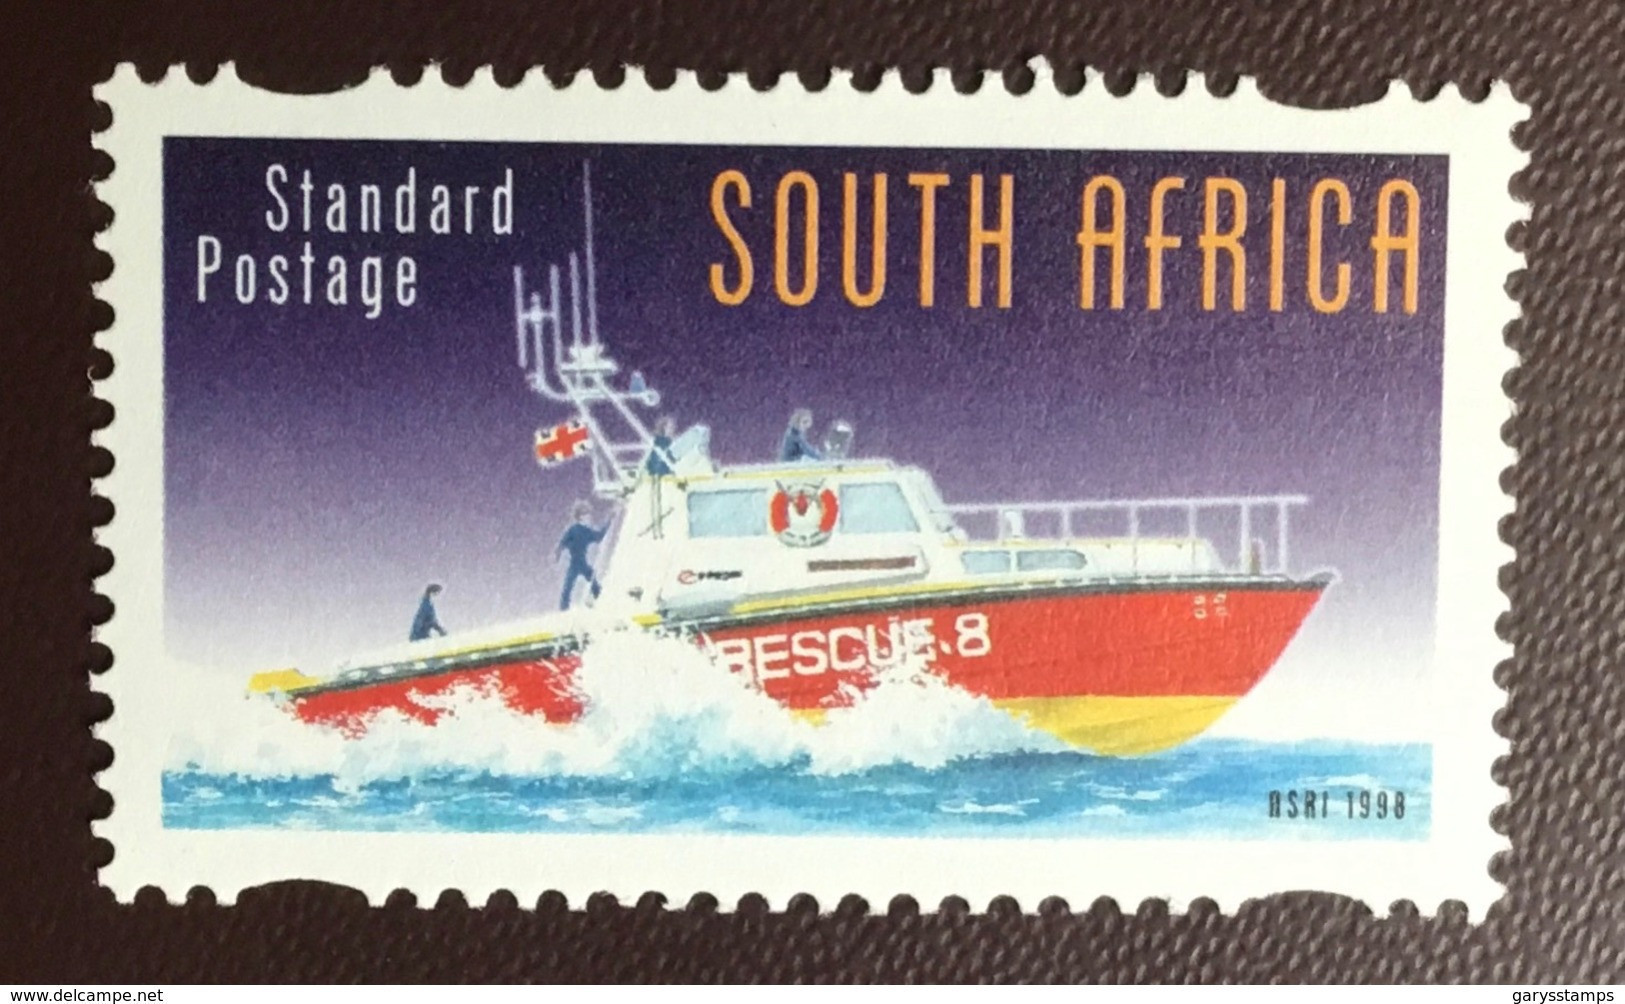 South Africa 1998 Sea Rescue Ships MNH - Ongebruikt